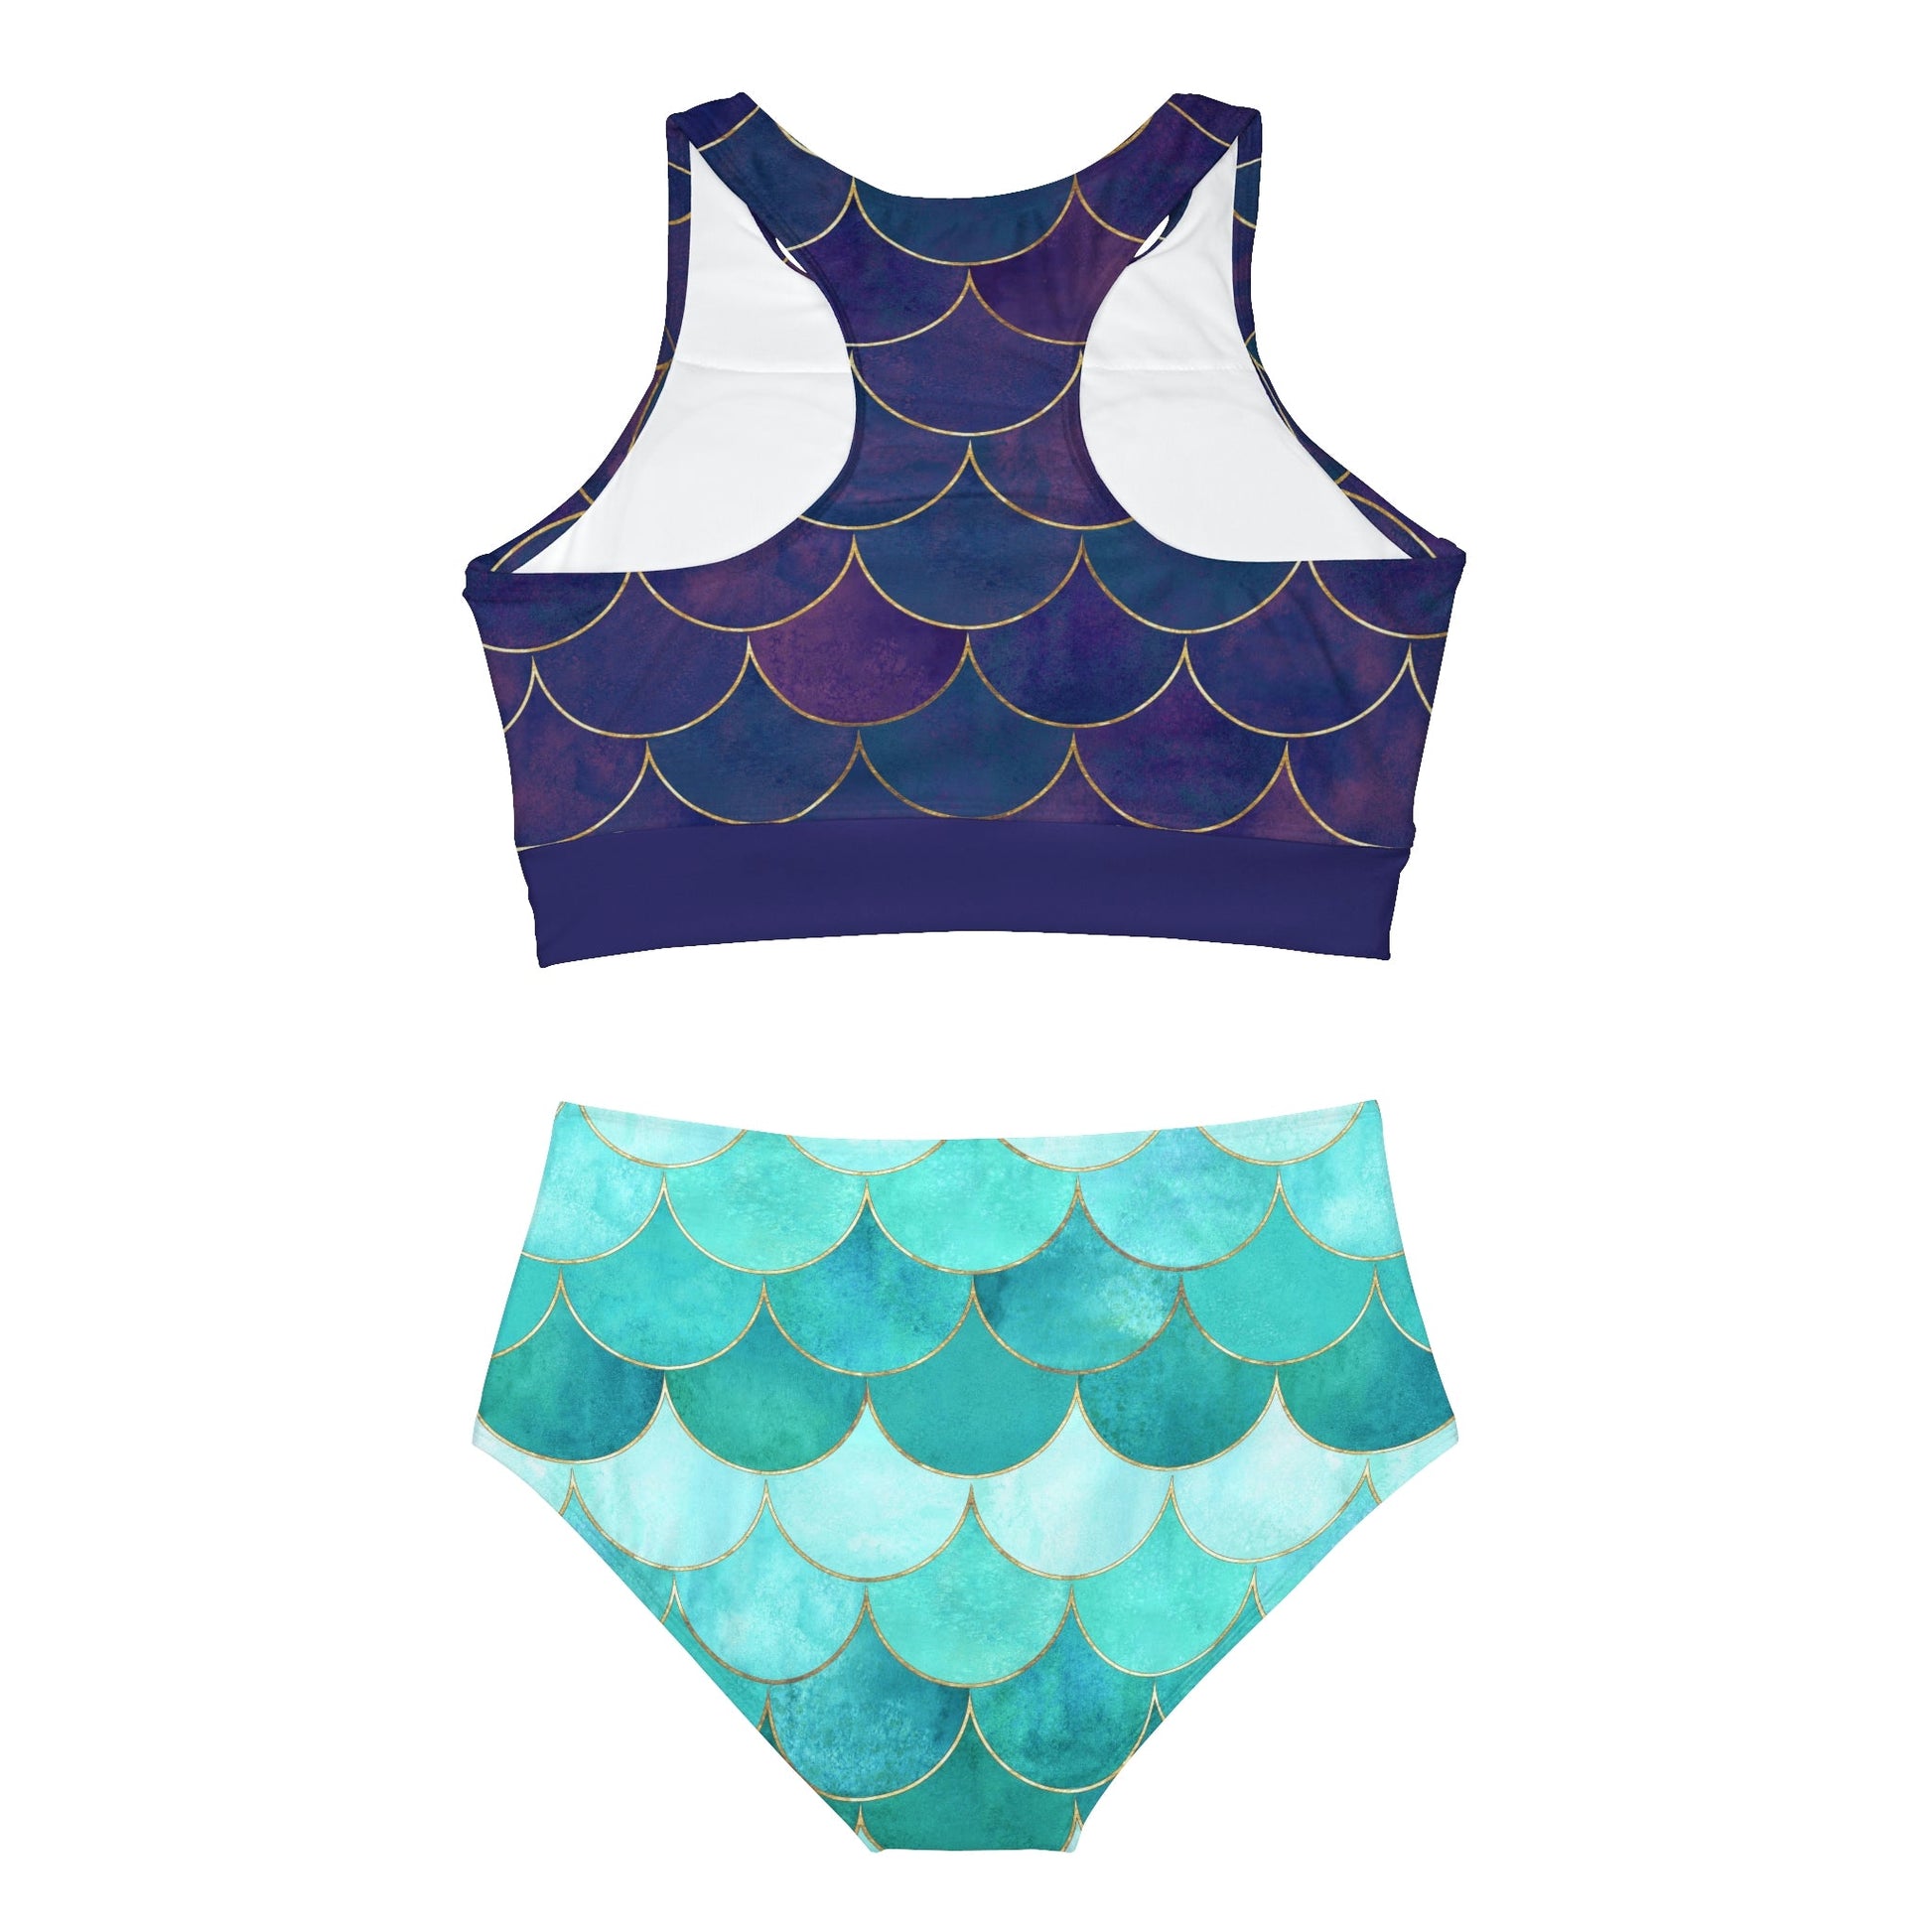 Mermaid Scale Sporty Bikini Set All Over PrintAOPAssembled in the USA#tag4##tag5##tag6#